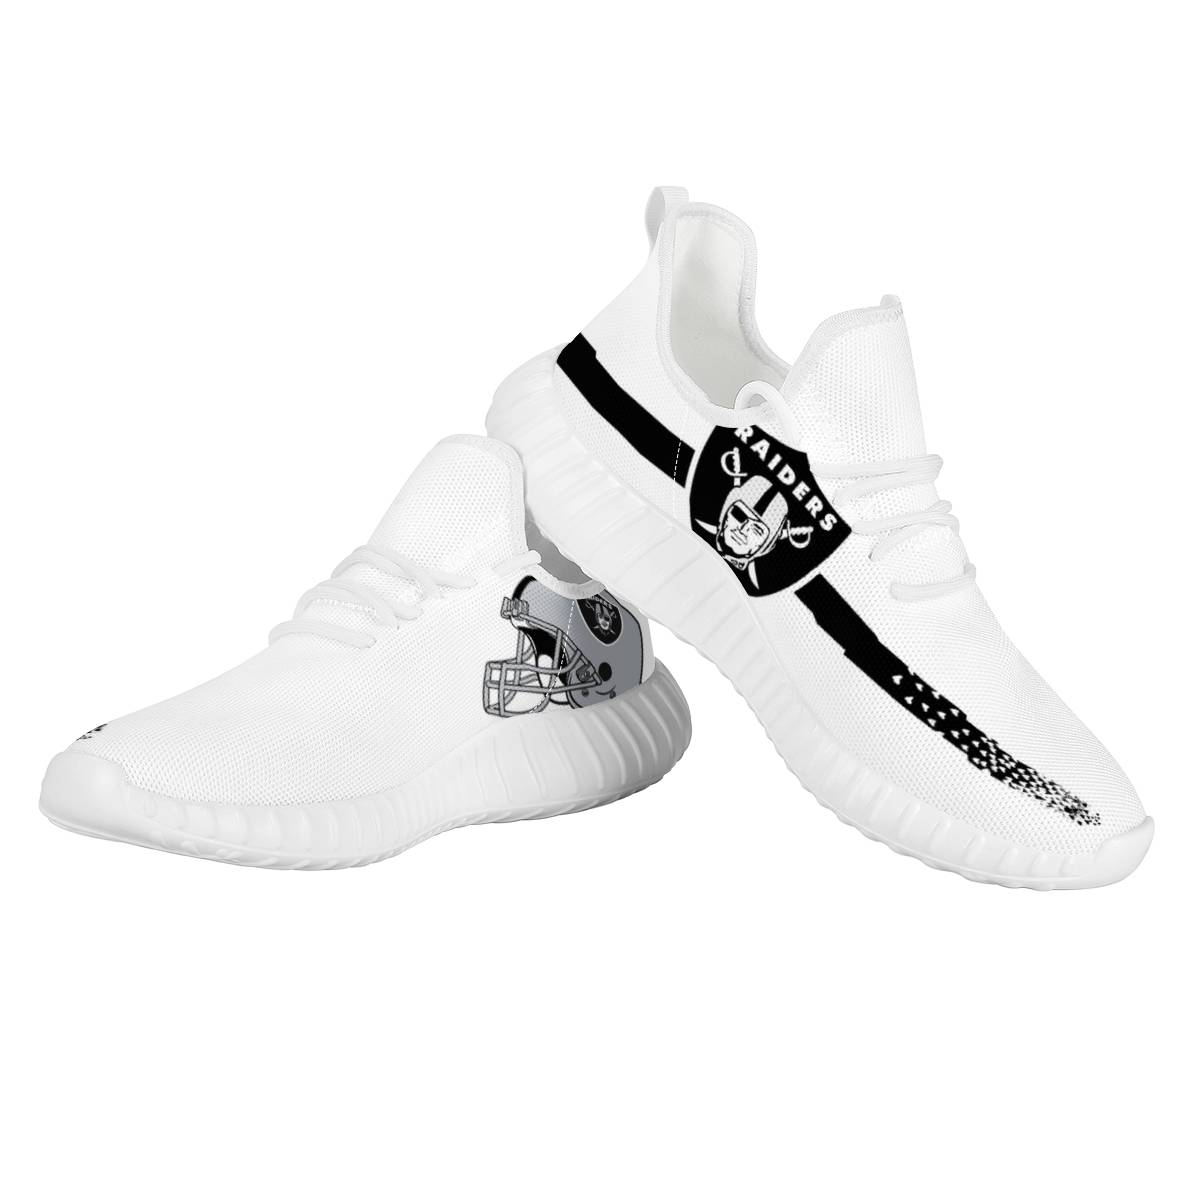 Men's Las Vegas Raiders Mesh Knit Sneakers/Shoes 013